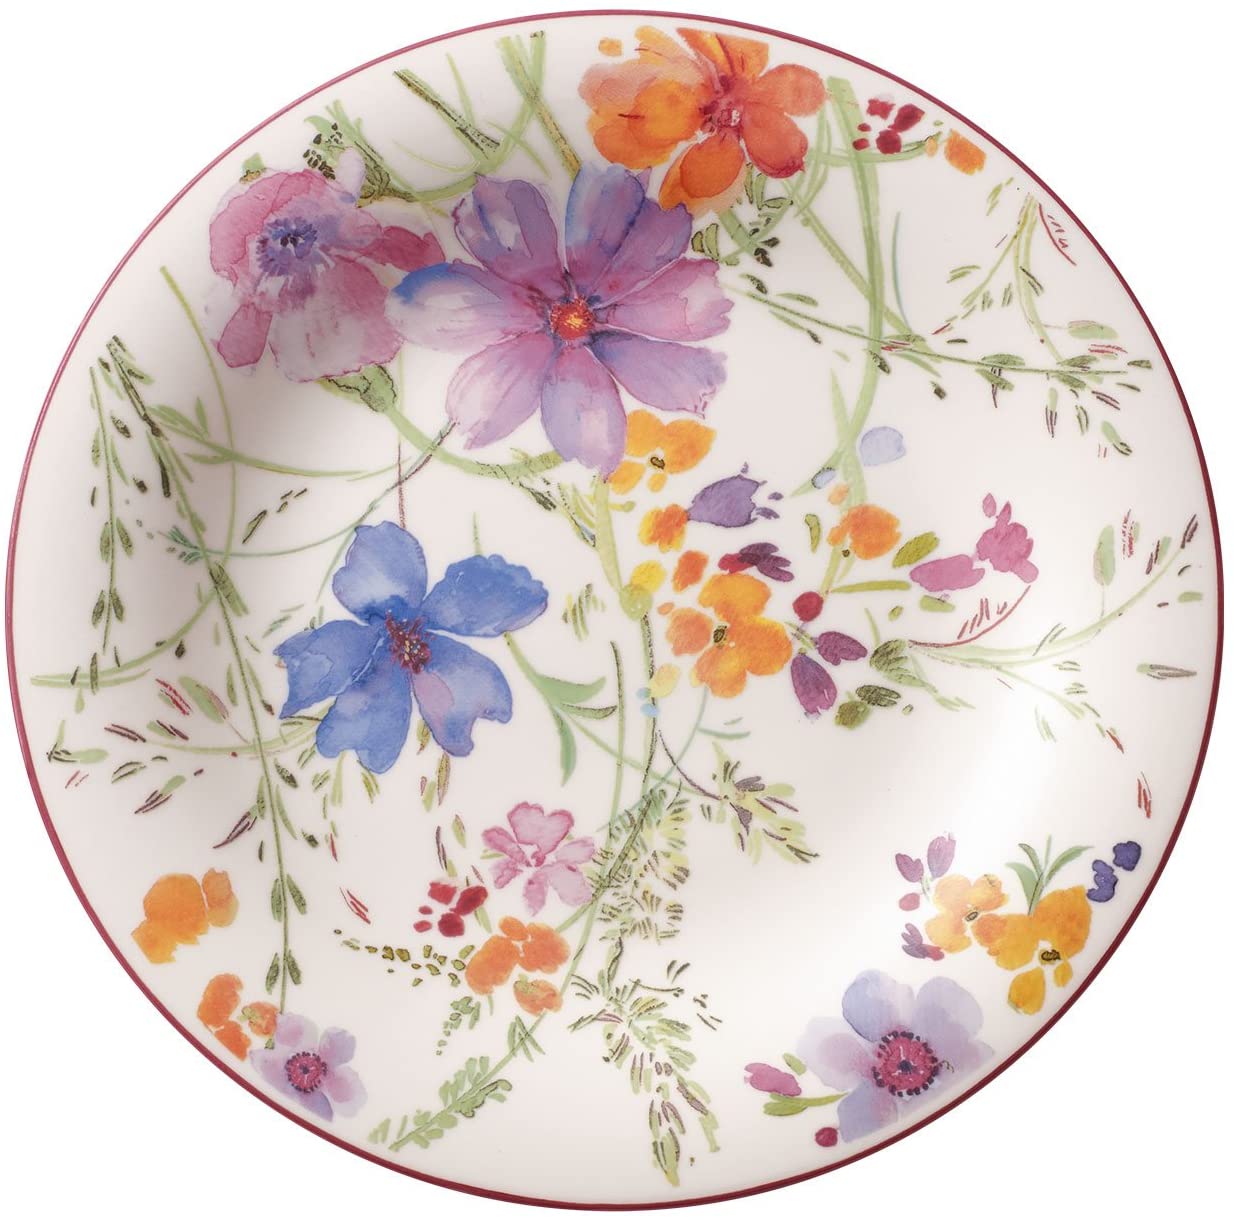 Villeroy & Boch Villeroy und Boch Mariefleur Tea Pastry Plate, 21 cm, Premium Porcelain, White/Multicoloured